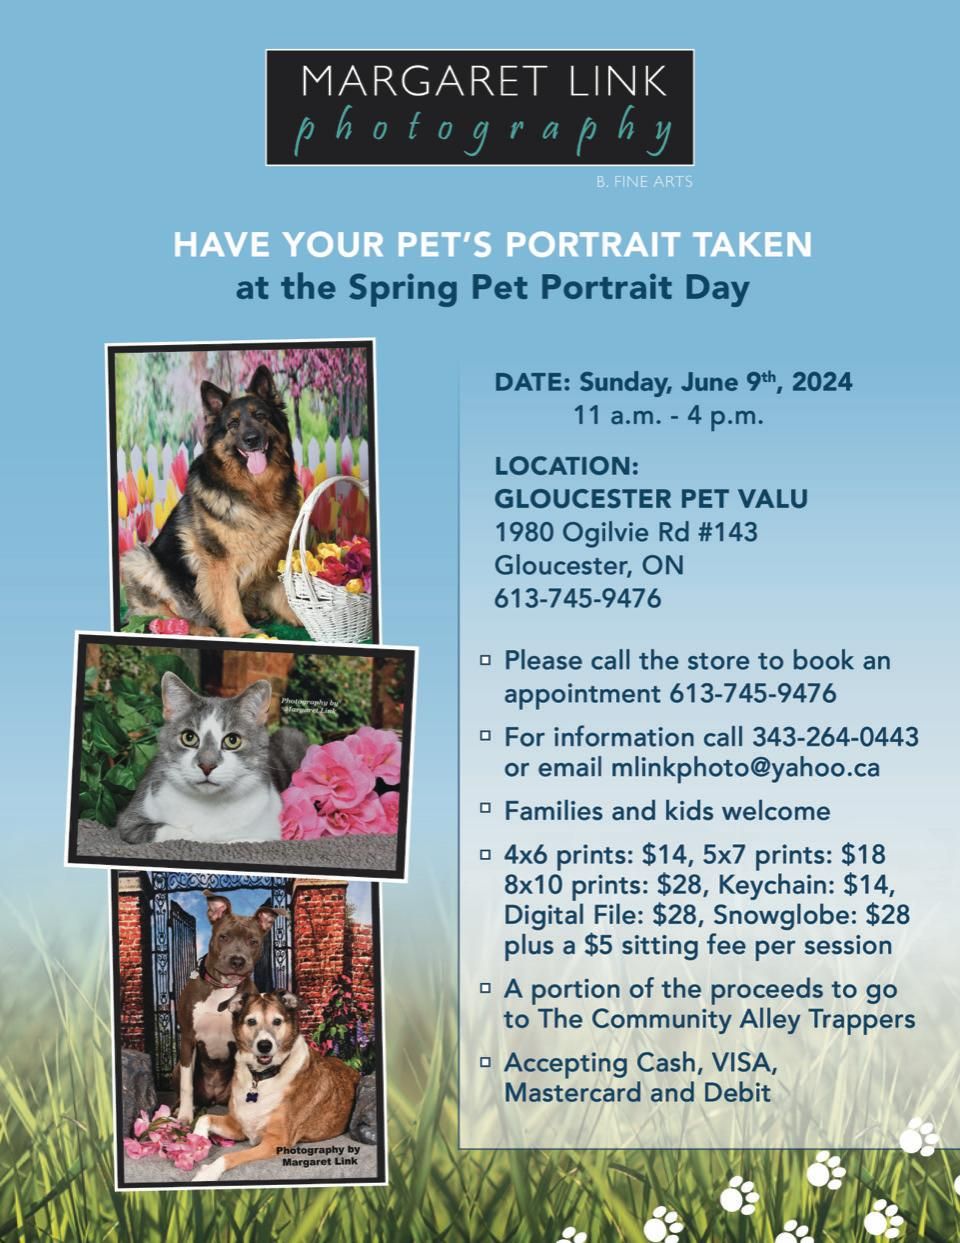 Spring Pet Portraits Gloucester Pet Valu Sunday June 9th 11-4 call  613 745 9476 for an appt